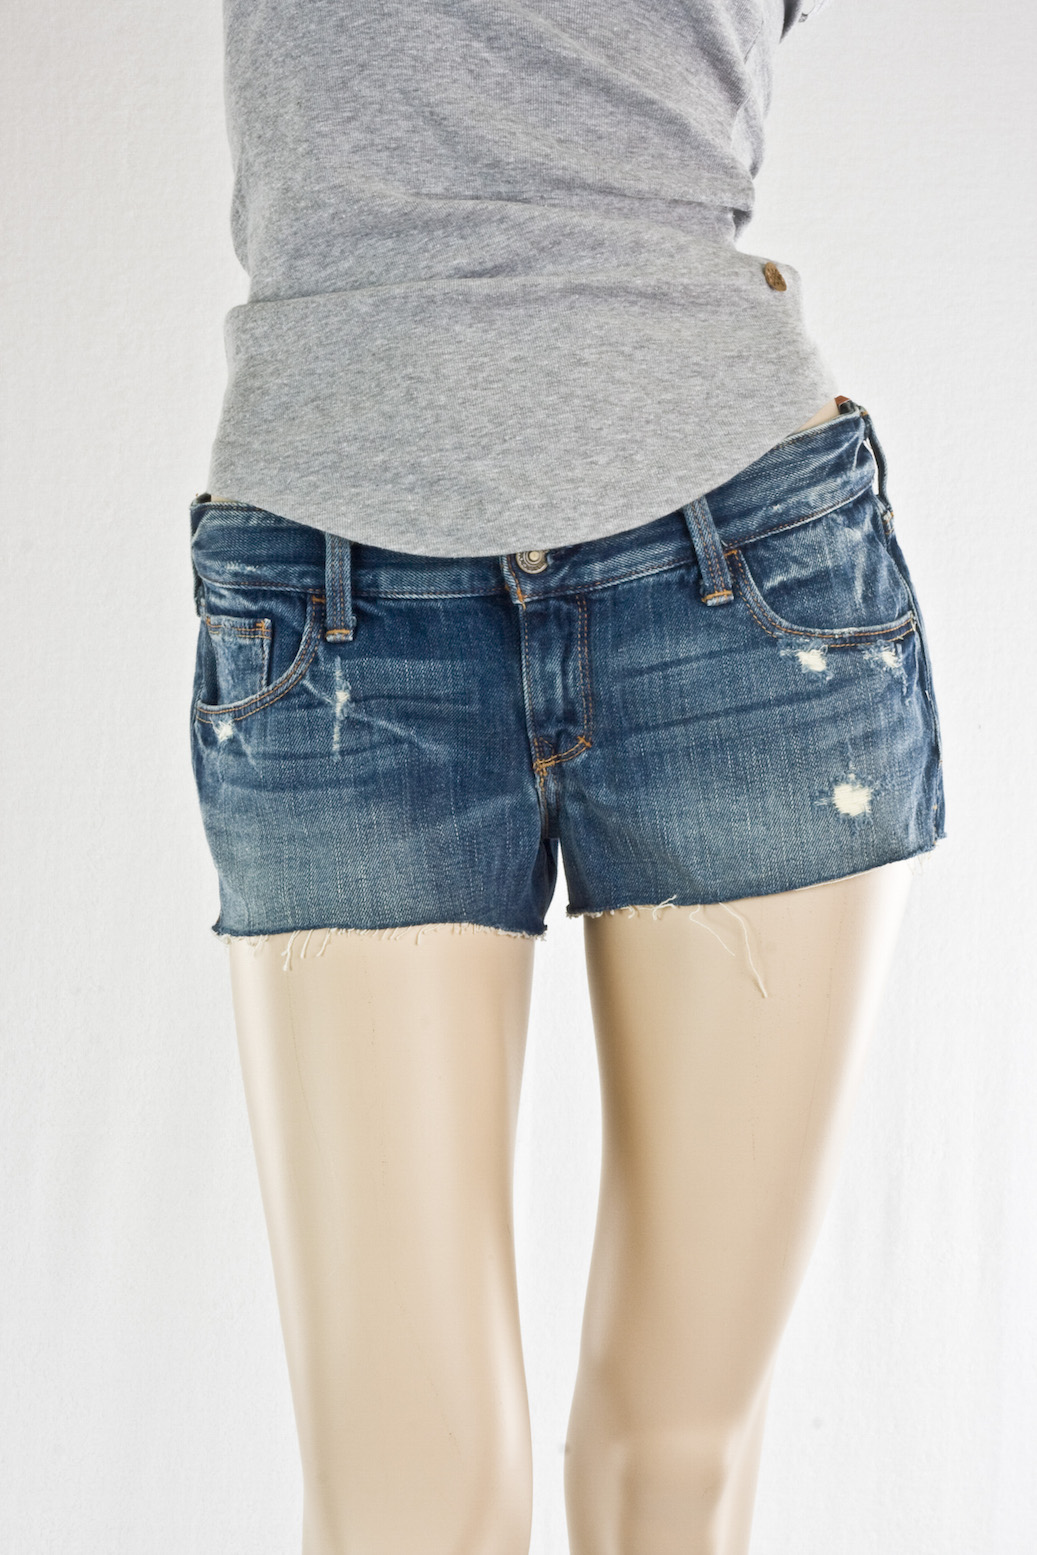 джинсы женские Abercrombie & Fitch шорты SHORTS MEDIUM BLUE VINTAGE